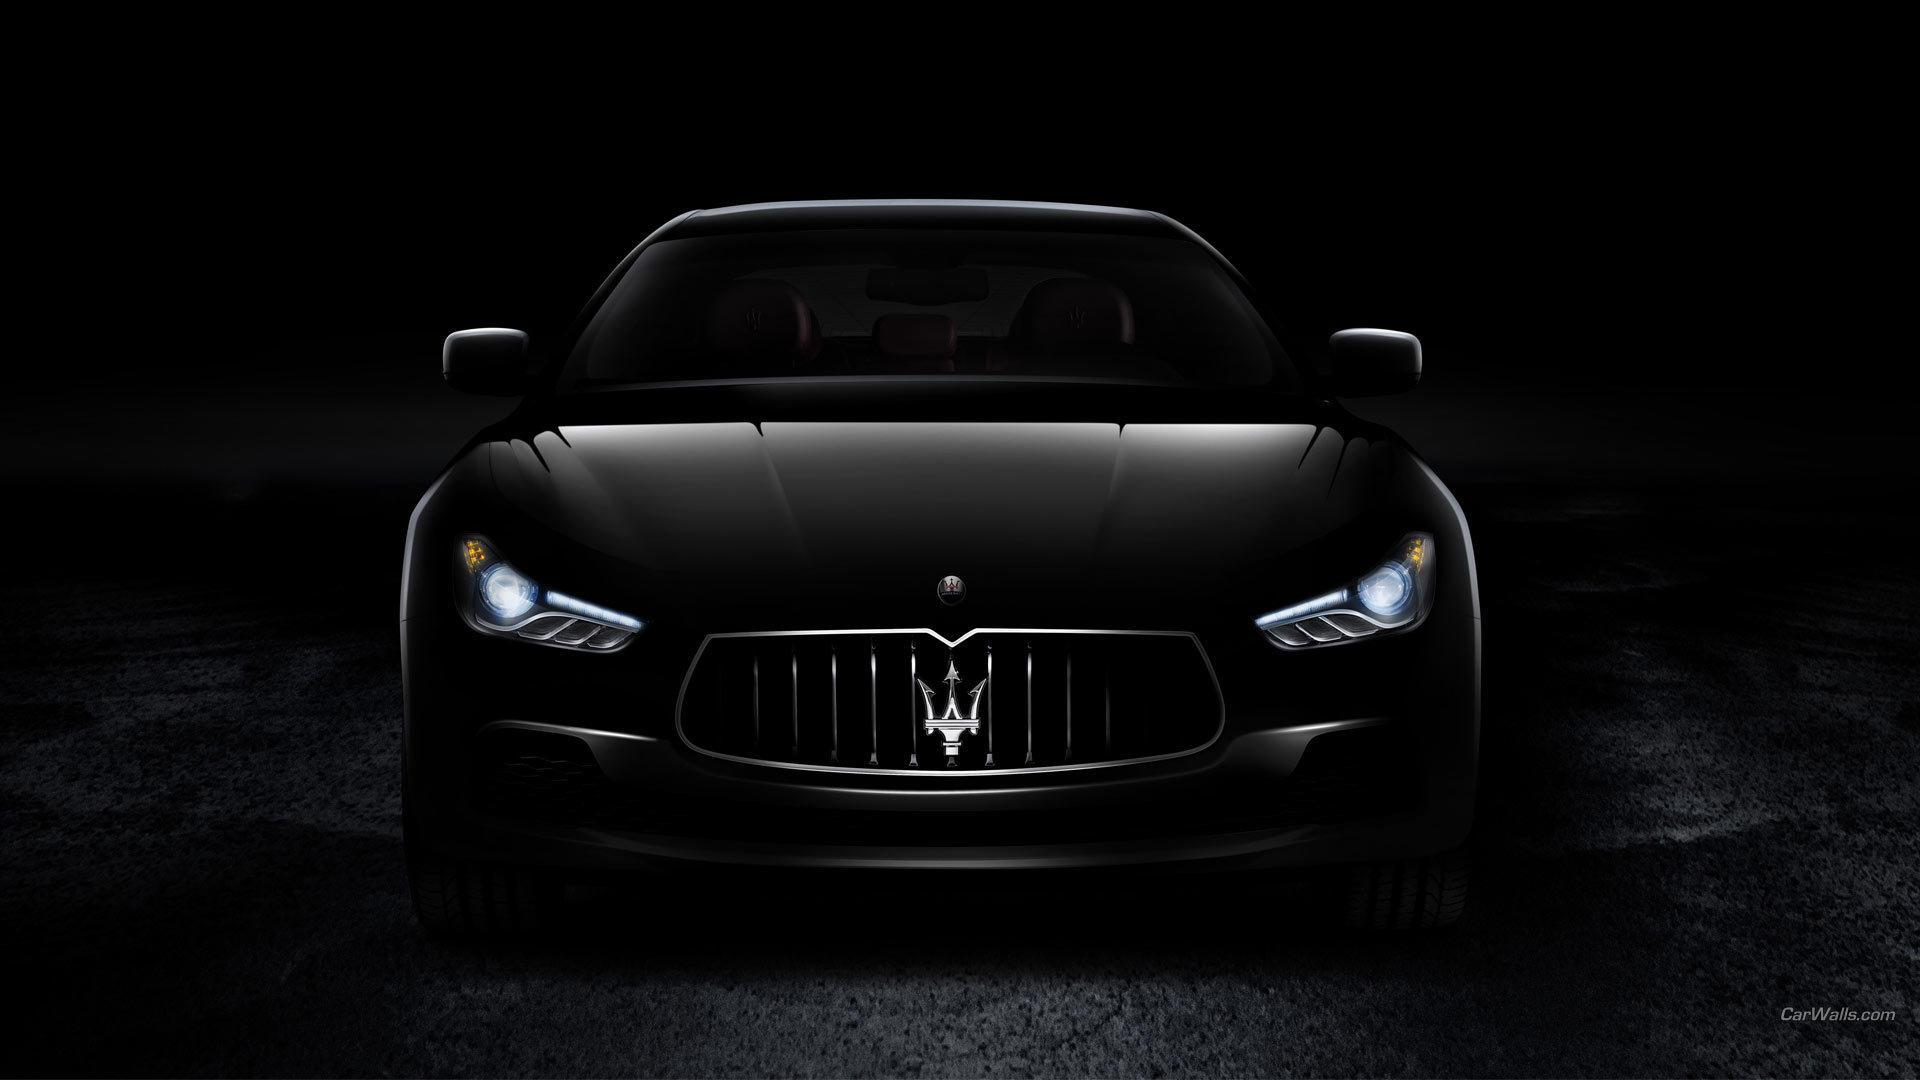 Best Maserati Ghibli background ID:257199 for High Resolution full hd 1920x1080 PC